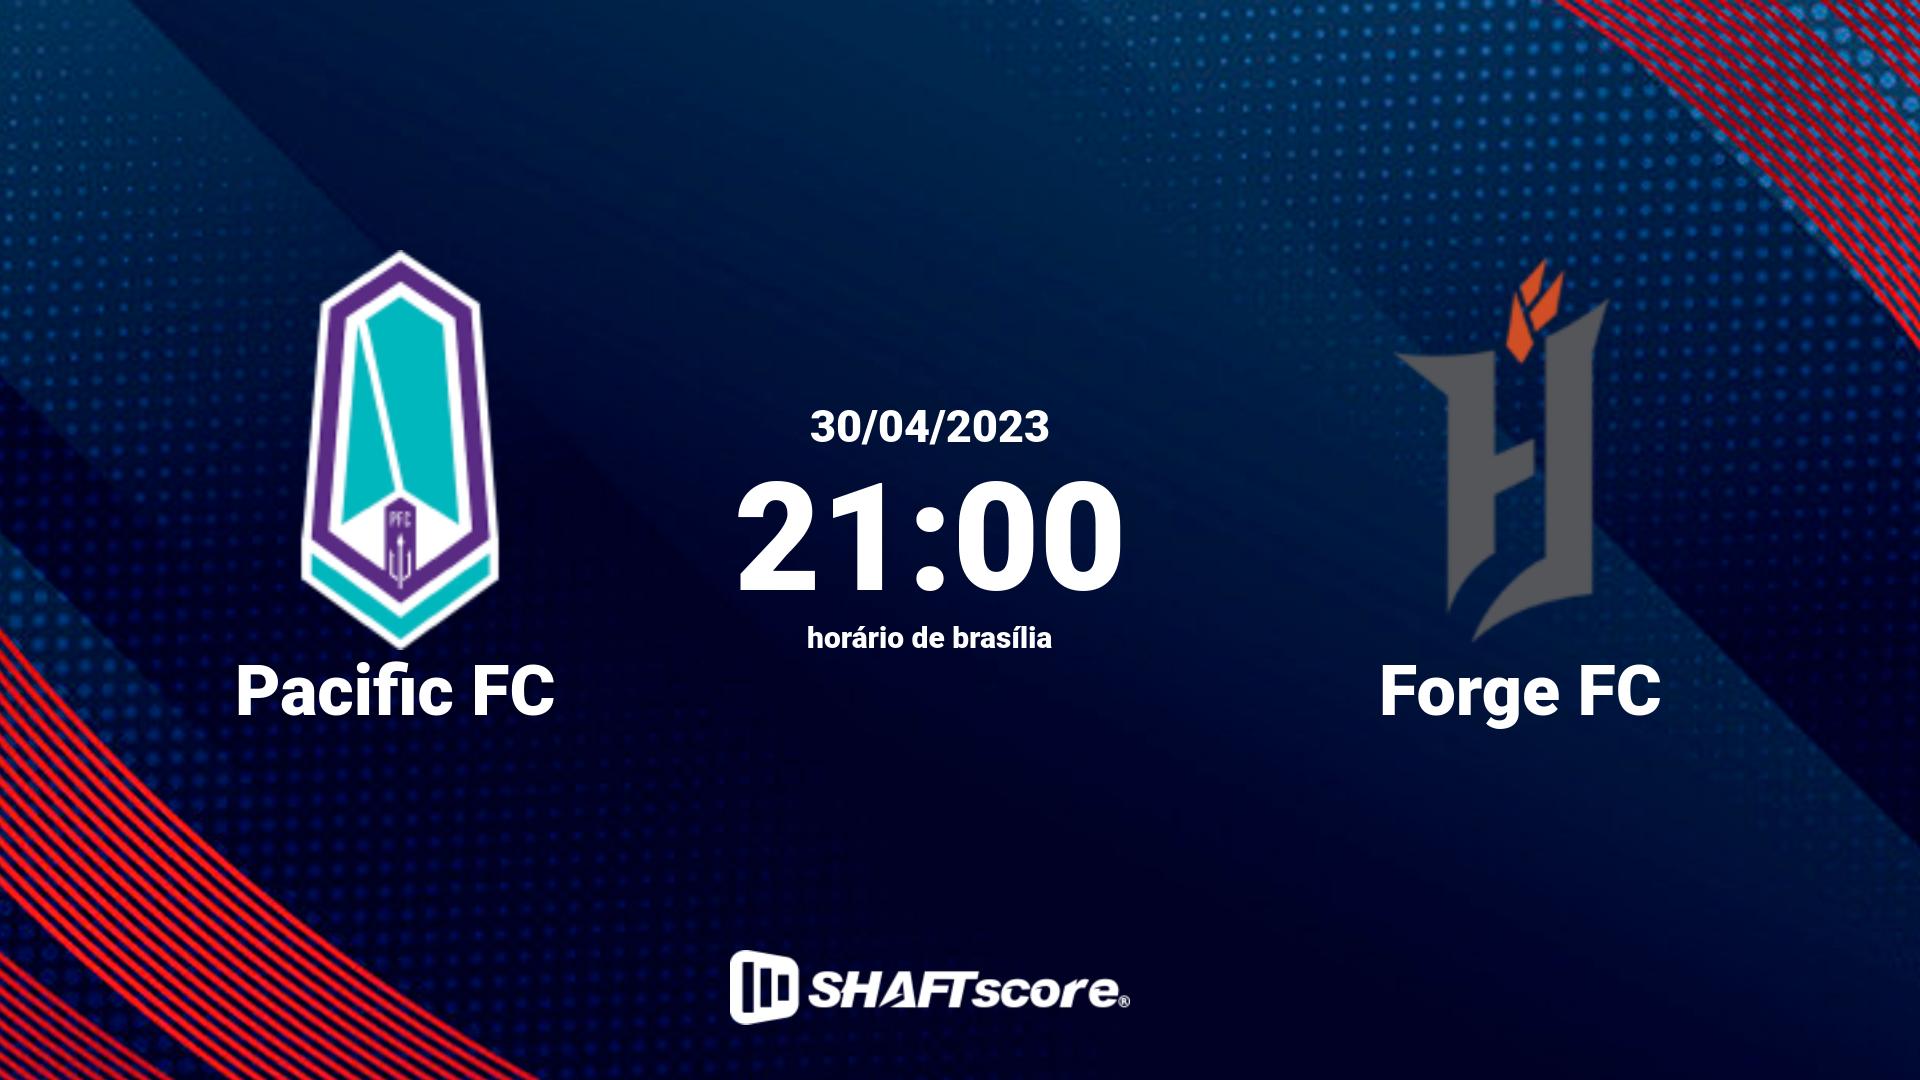 Estatísticas do jogo Pacific FC vs Forge FC 30.04 21:00